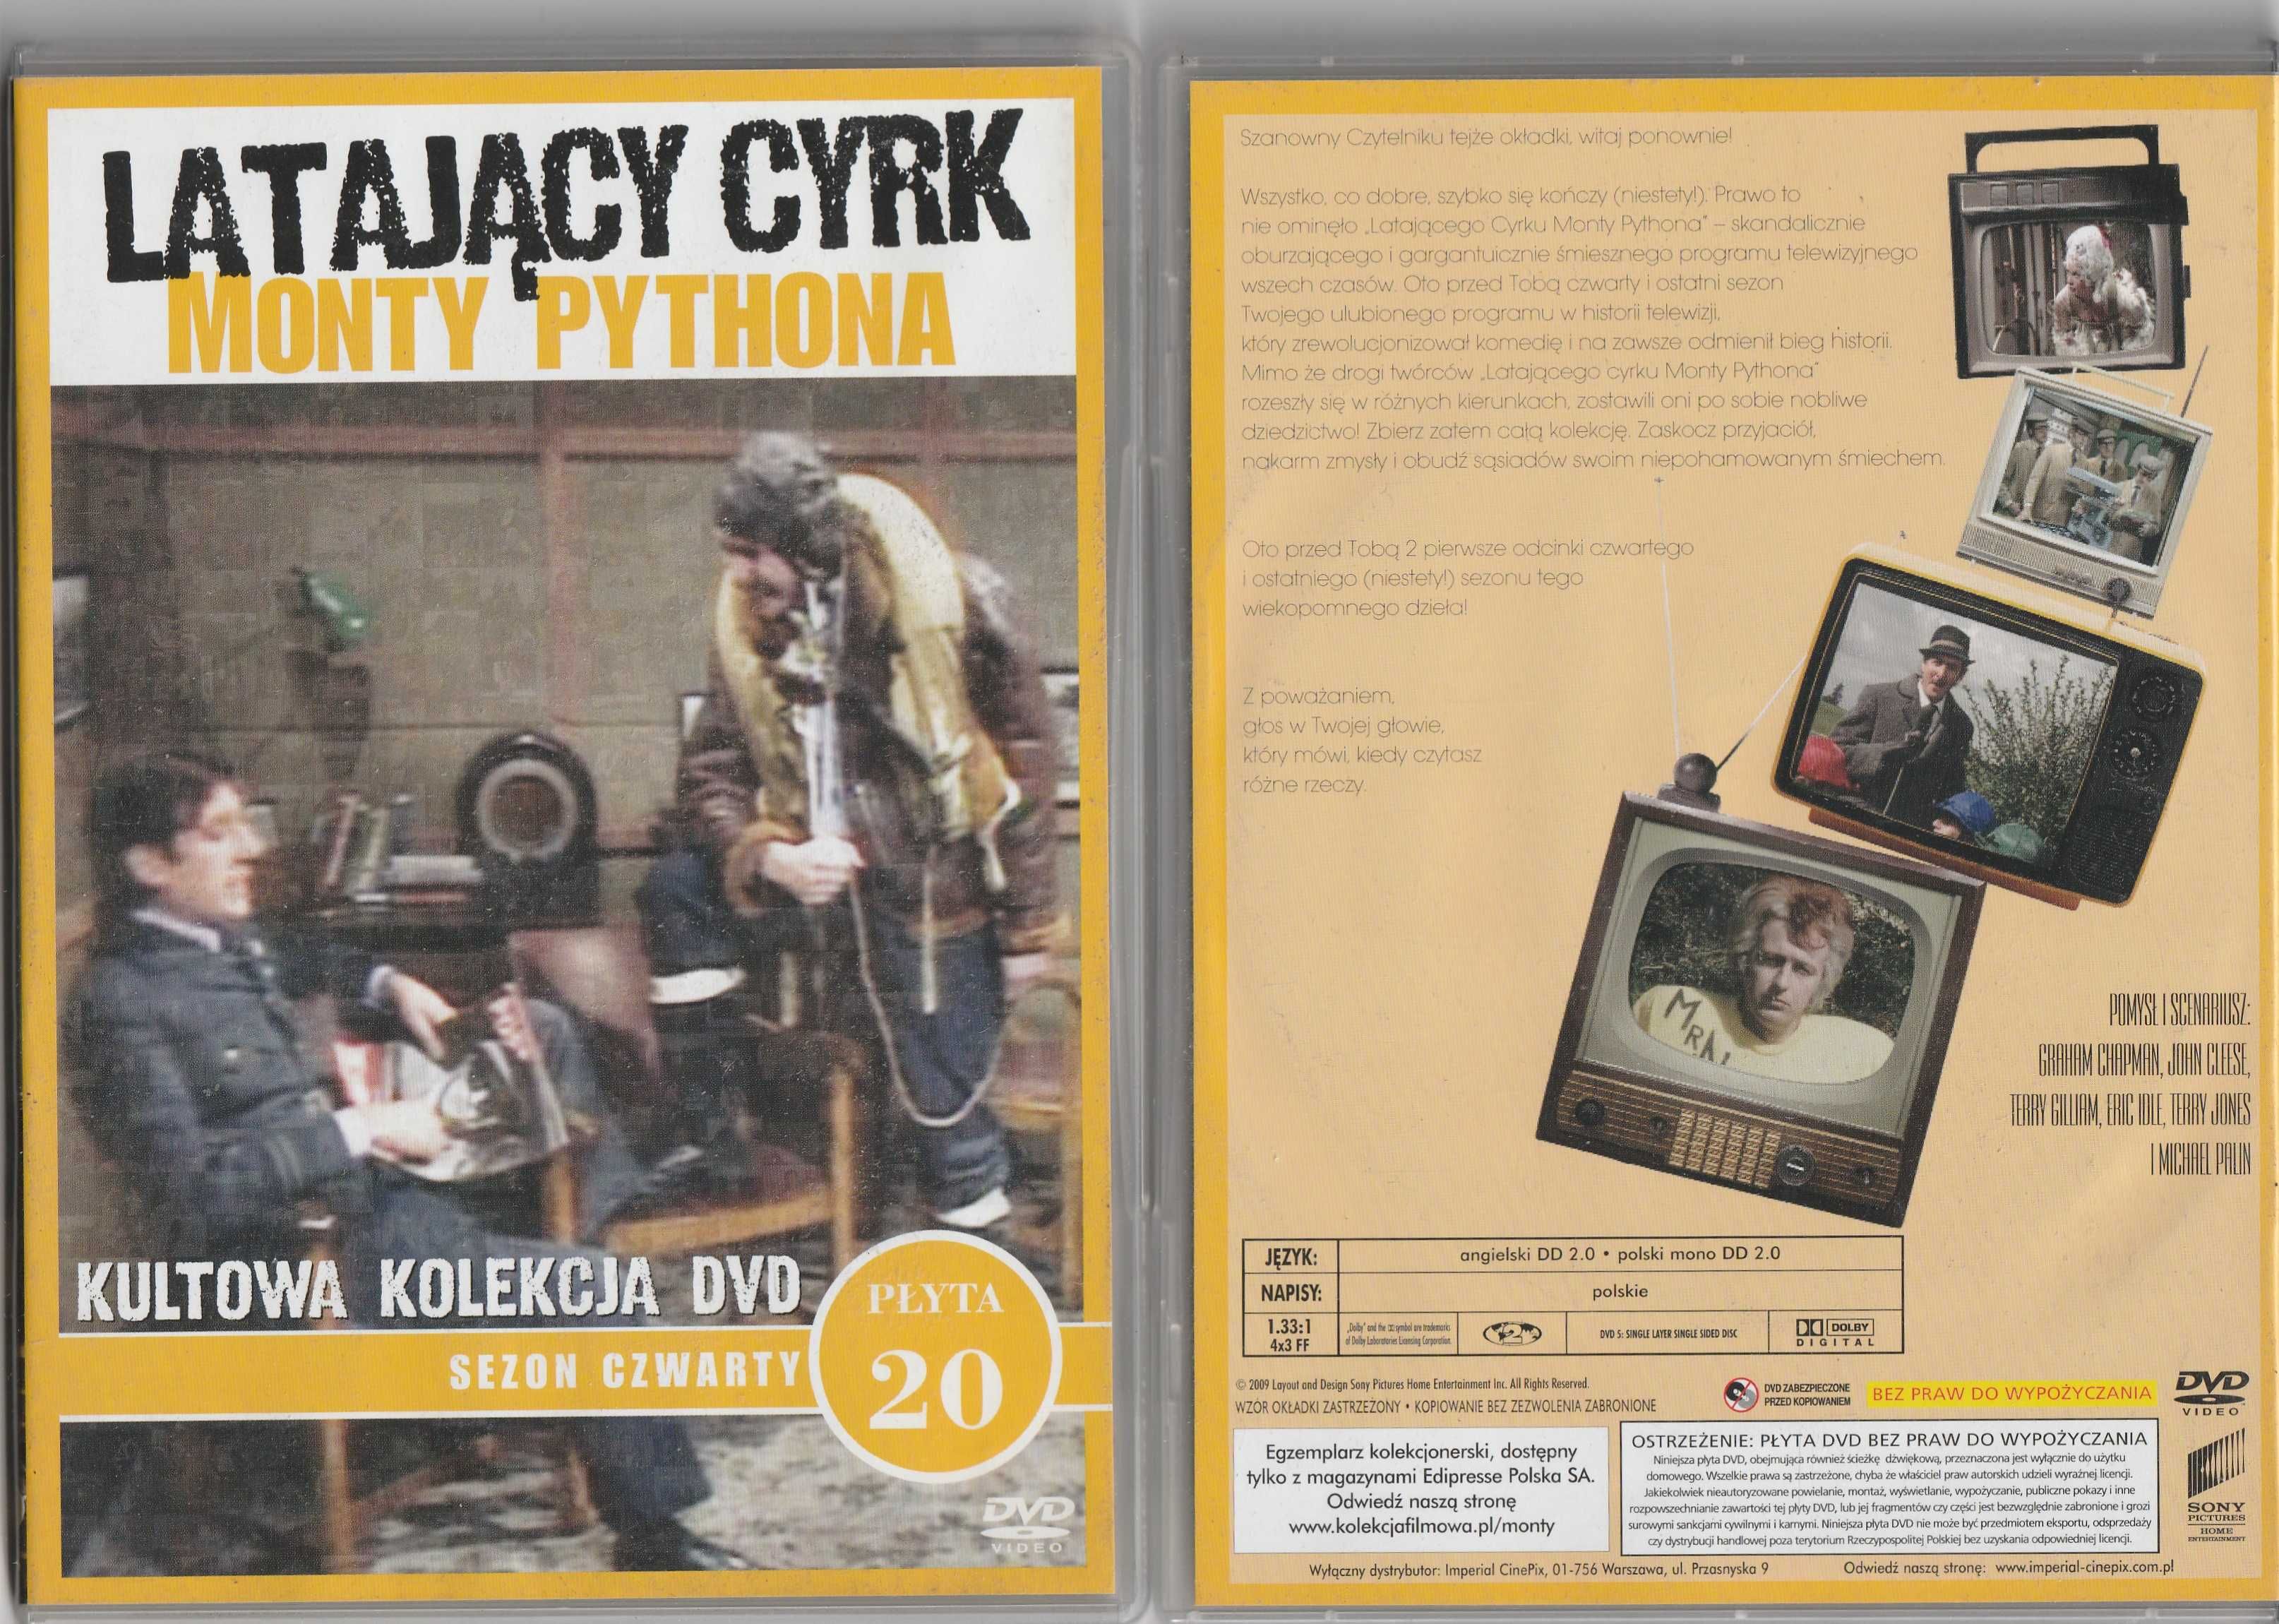 Latający cyrk Monty Pythona sezon 4 płyta 20 DVD